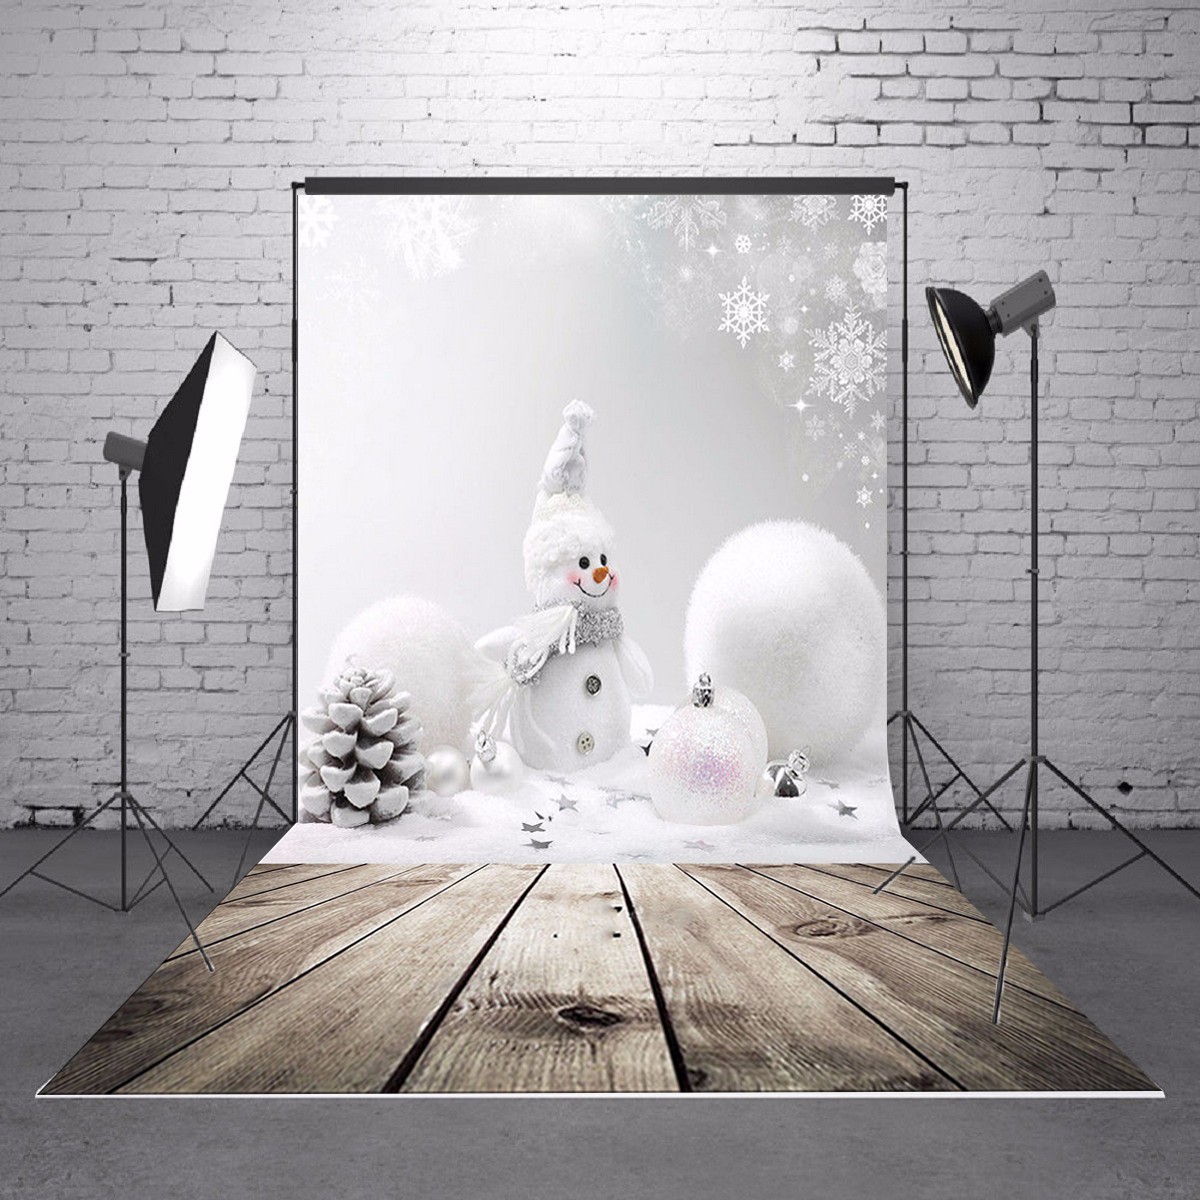 3x5ft-Christmas-Theme-Christmas-Snowman-Wooden-Photography-Vinyl-Background-1130341-4